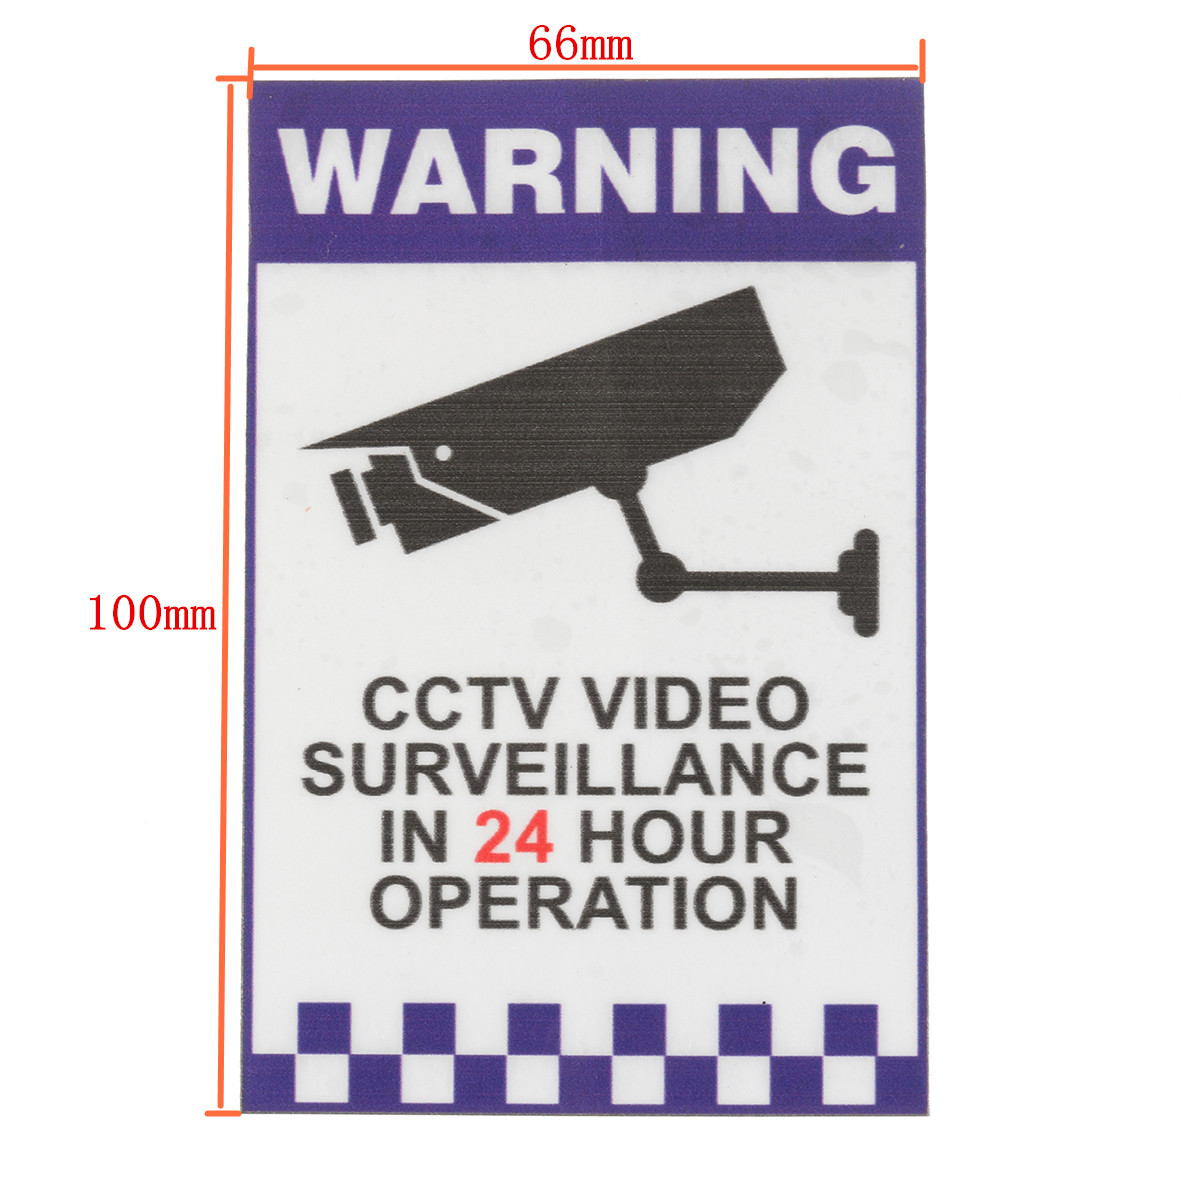 Warning-CCTV-Security-Surveillance-Camera-Decal-Sticker-Sign-66mmx100mm-Internal-1152562-1